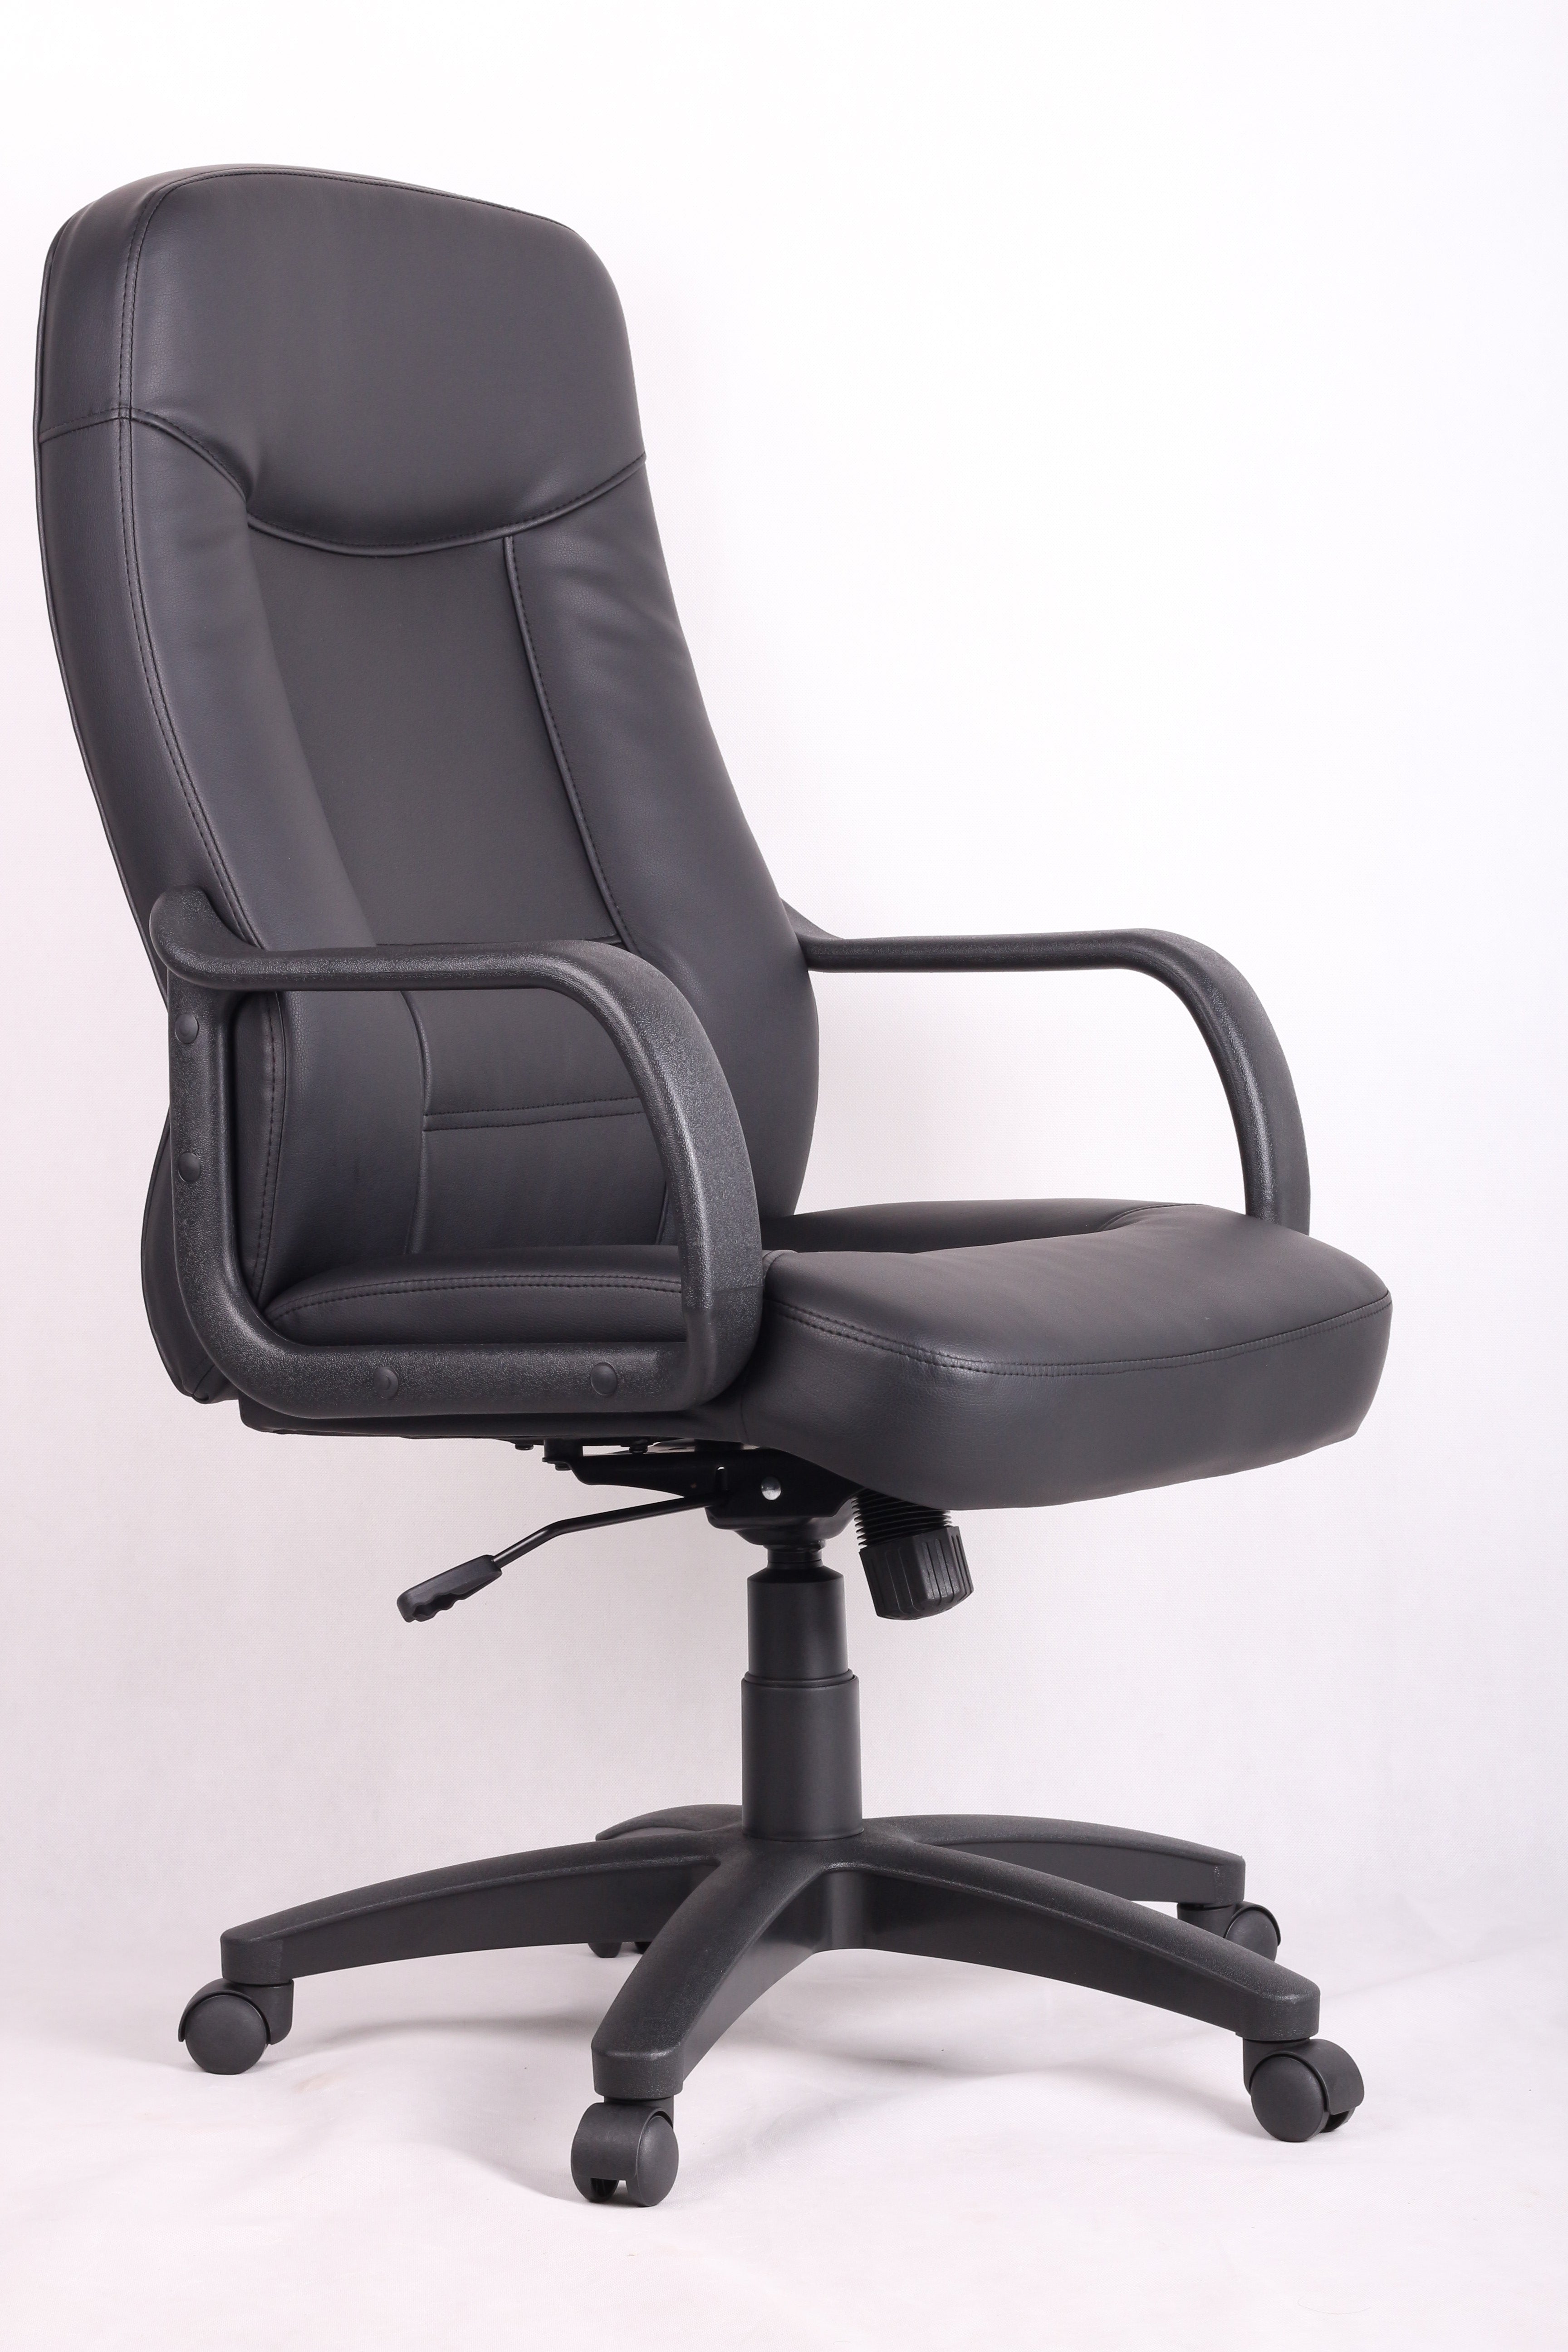 ViscoLogic DUX Ergonomic Adjustable Swivel  PU  Leather Home Office Computer  Desk Chair (Black)